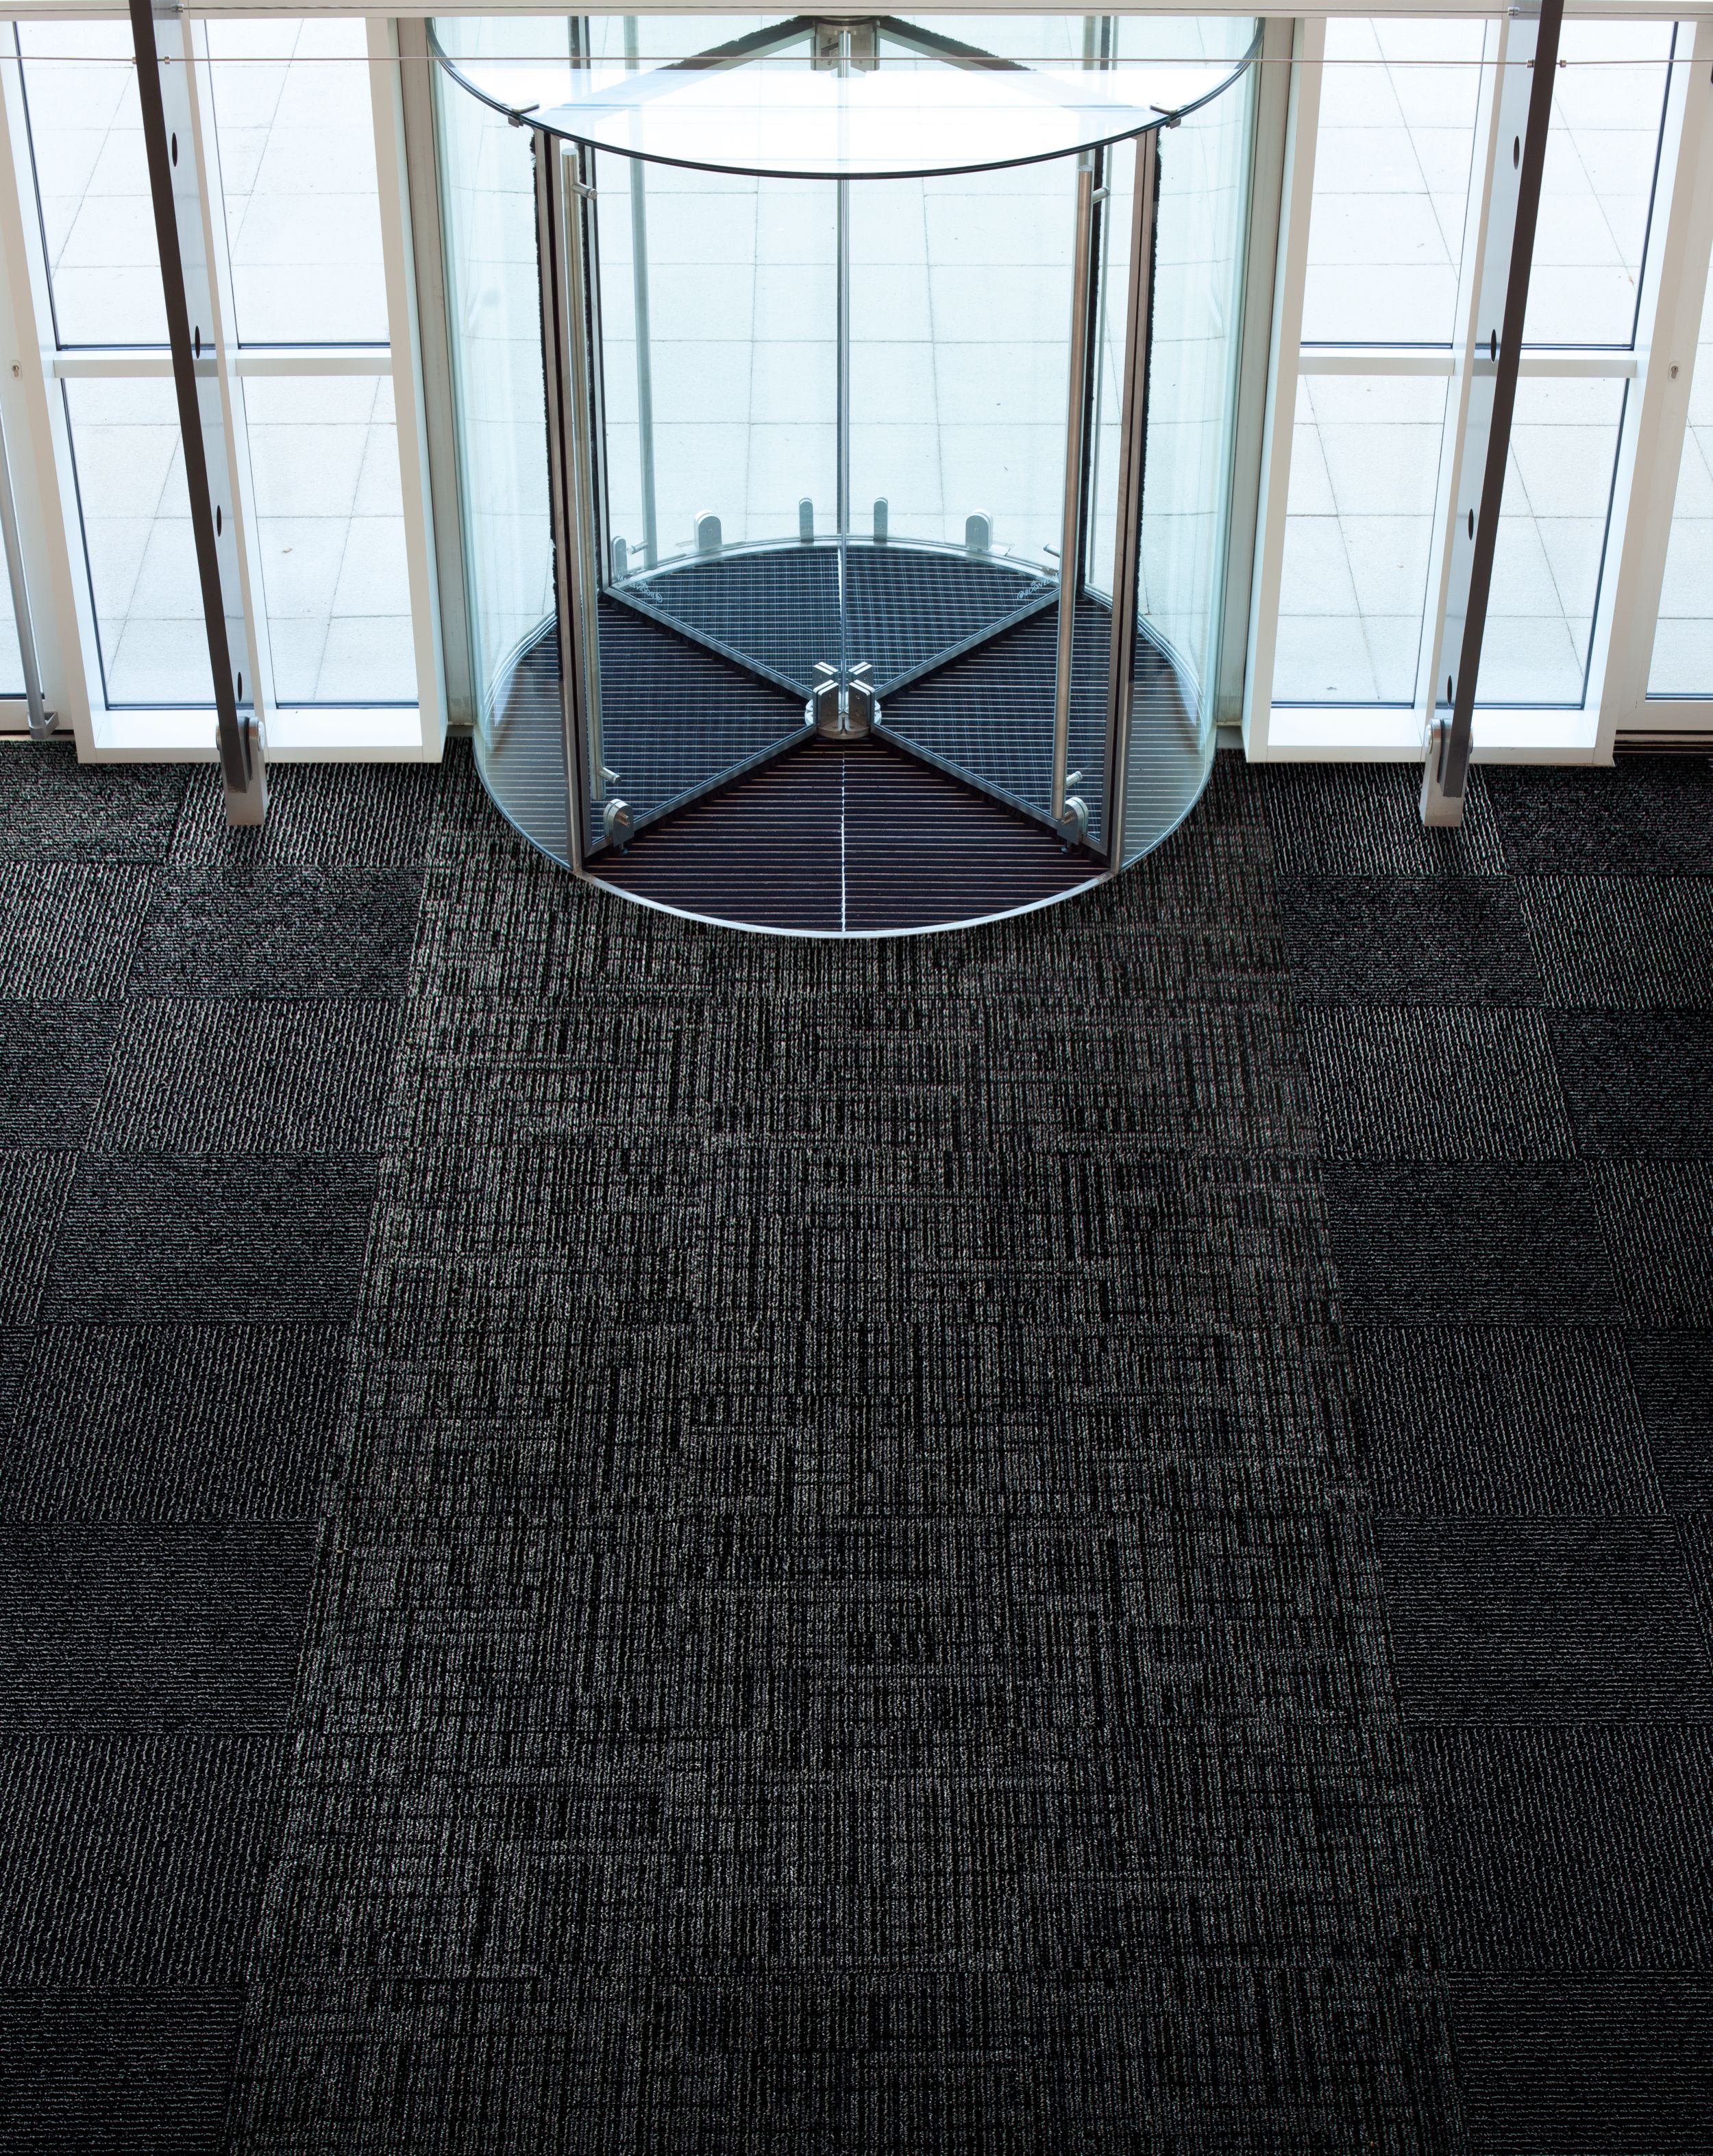 Interface SR699 and SR899 carpet tile in entryway with revolving door imagen número 6